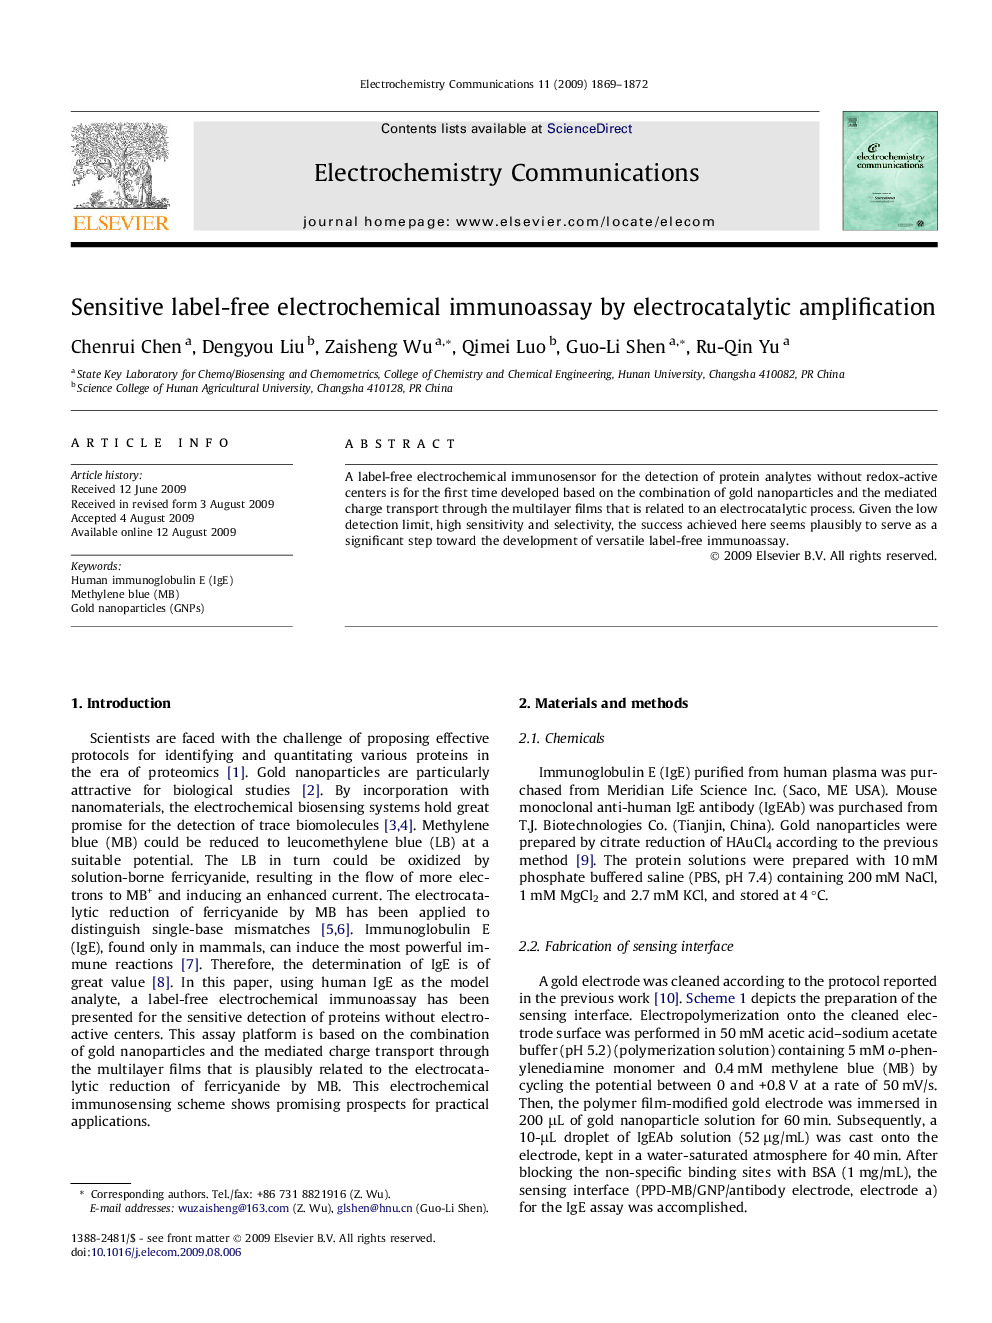 Sensitive label-free electrochemical immunoassay by electrocatalytic amplification